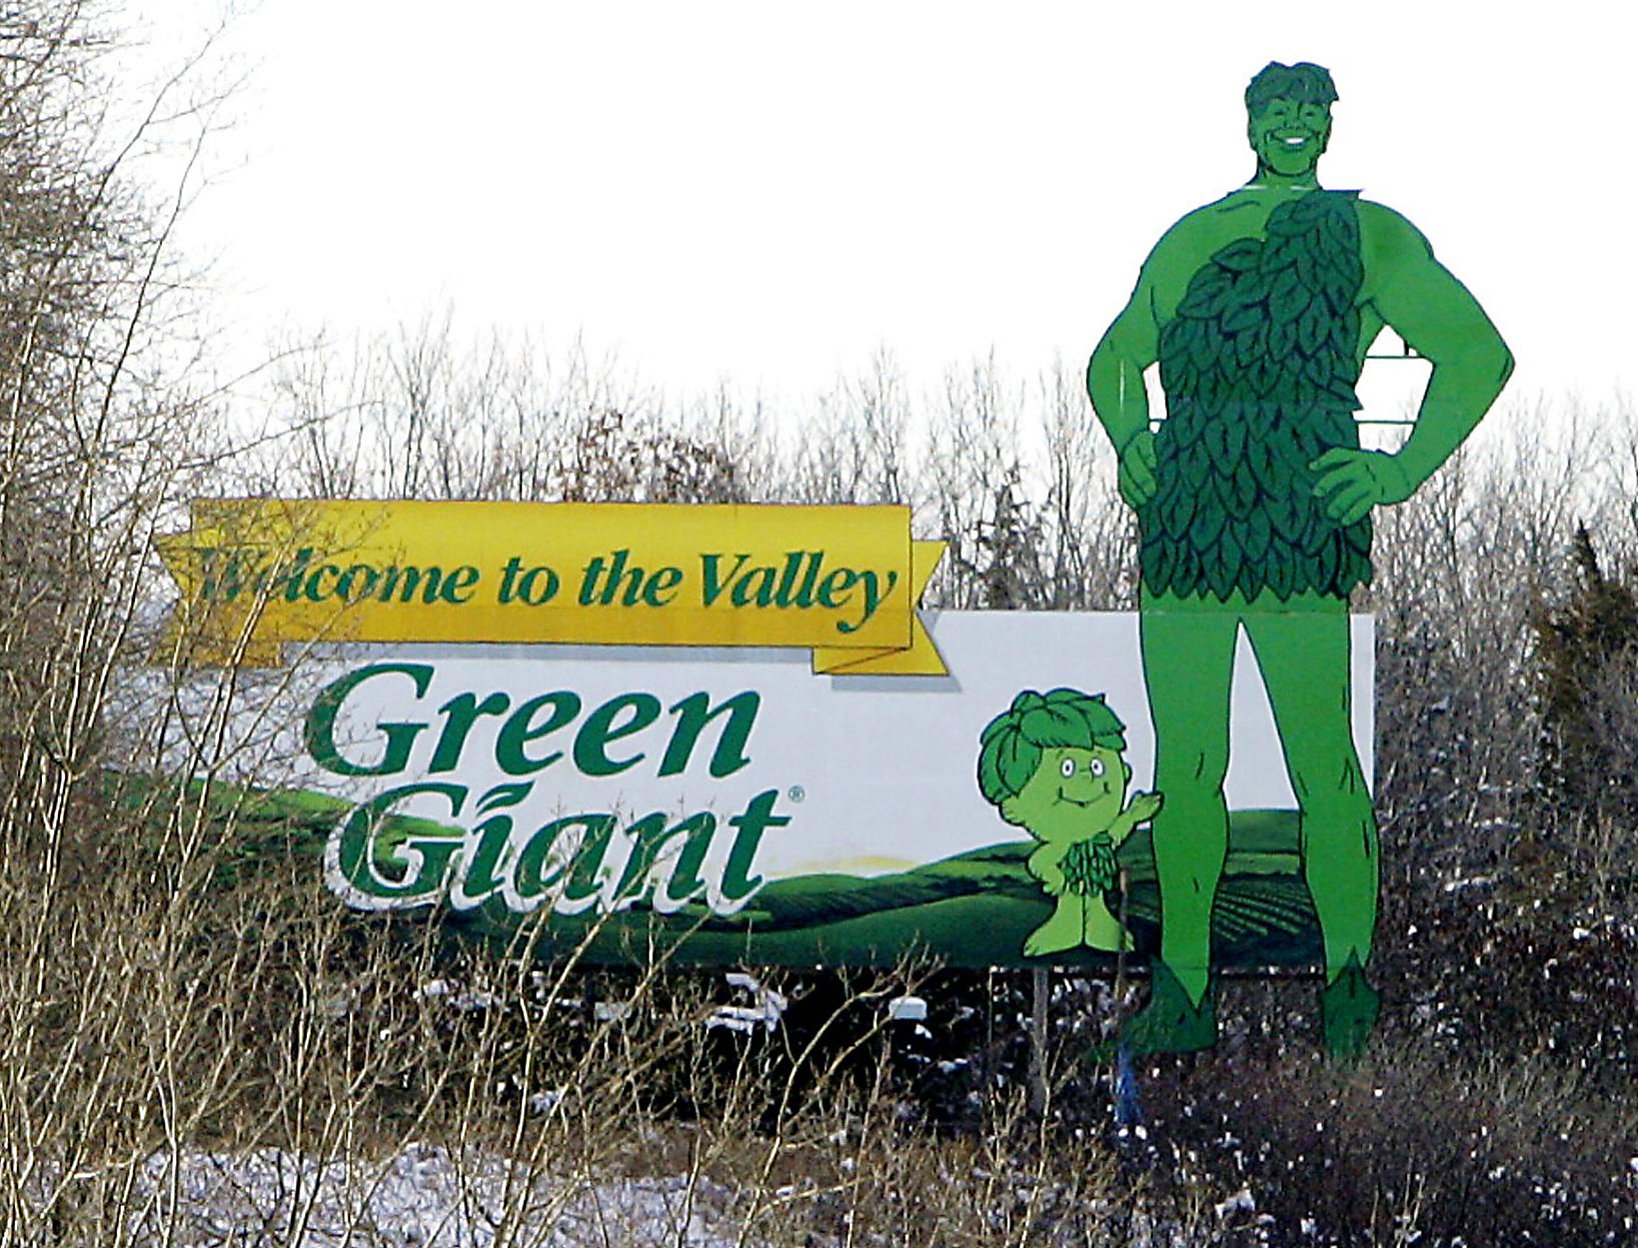 Jolly Green Giant marketers may have the last hohoho